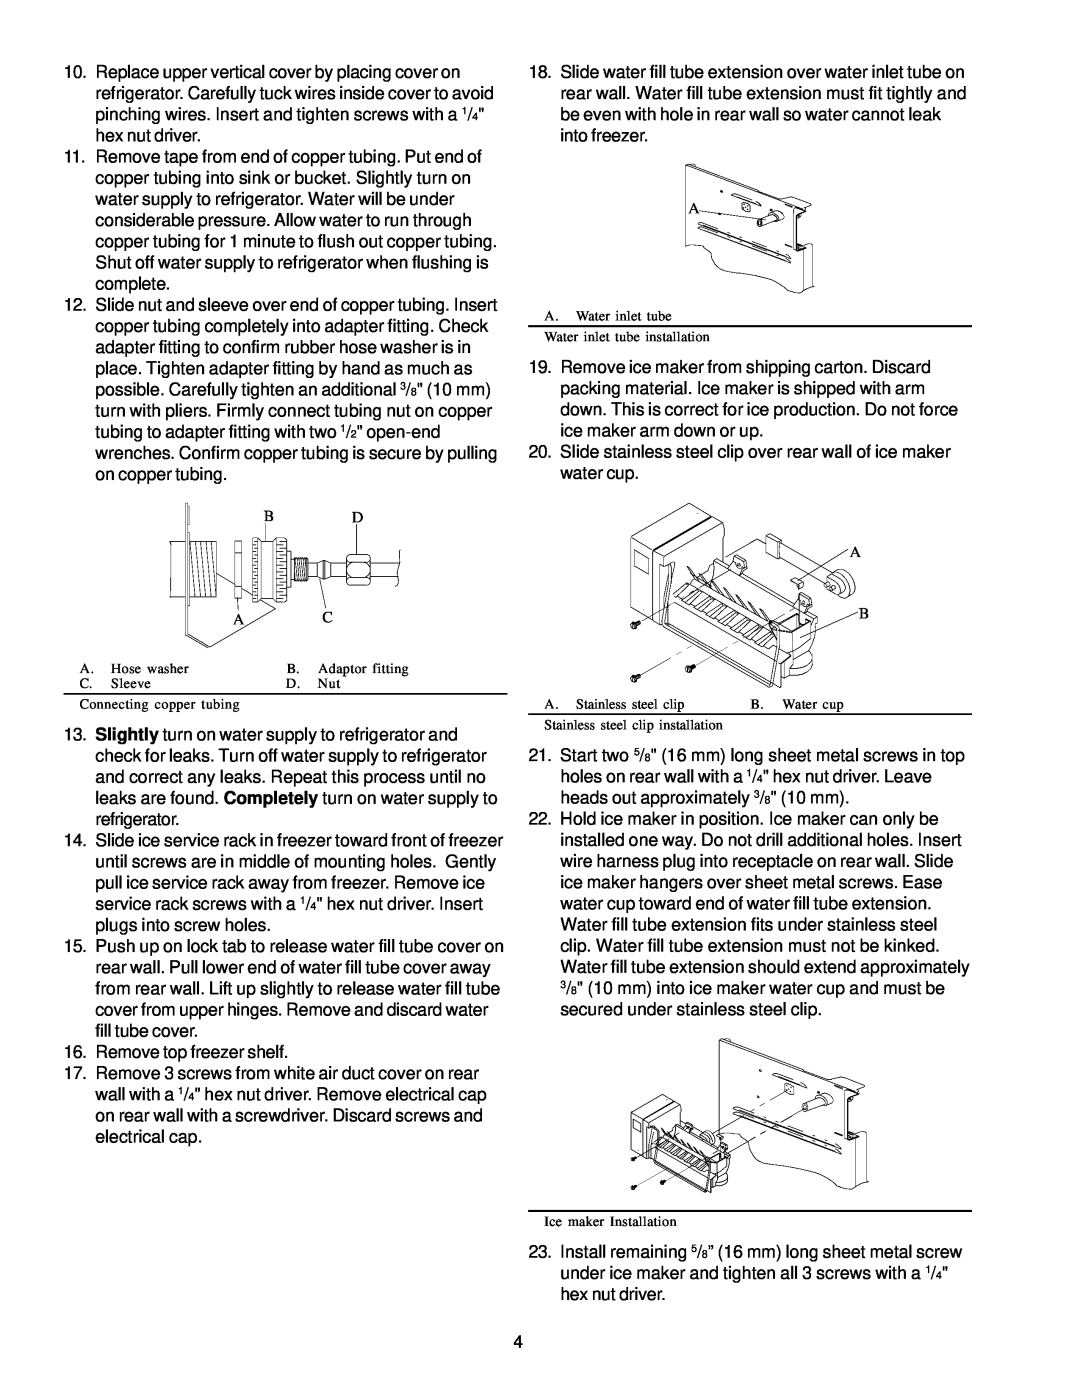 Whirlpool IC4 manual Remove top freezer shelf 